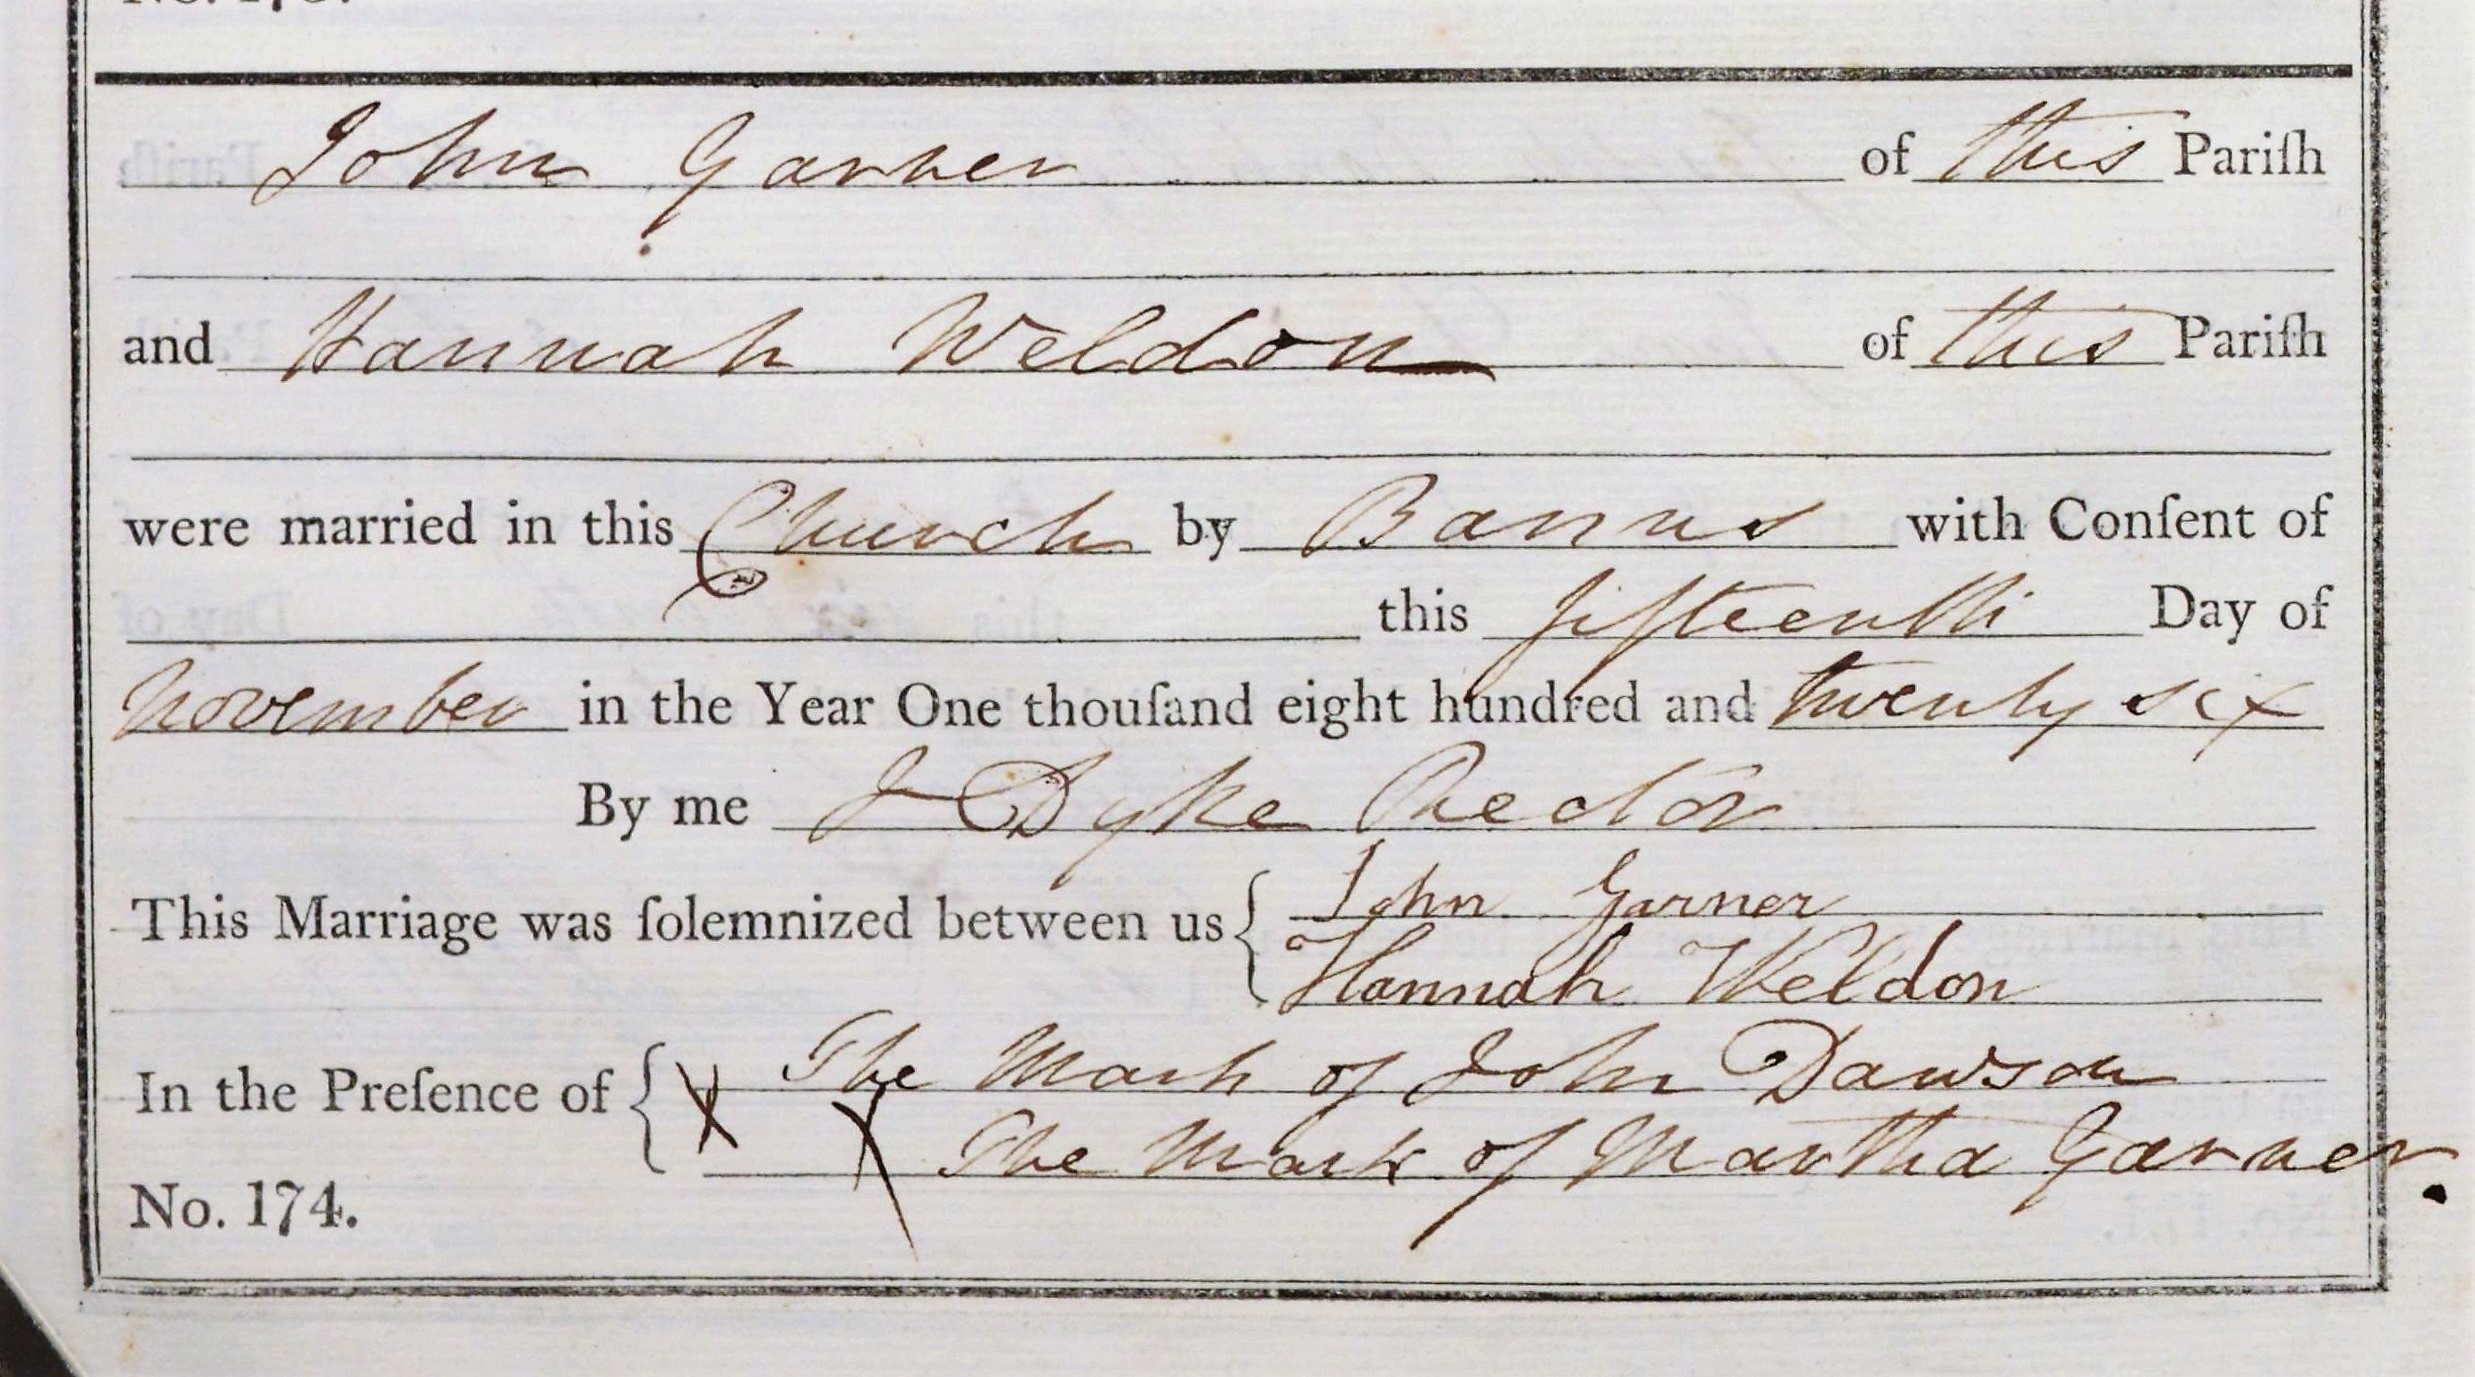 John Garner and Hannah Weldon's marriage record